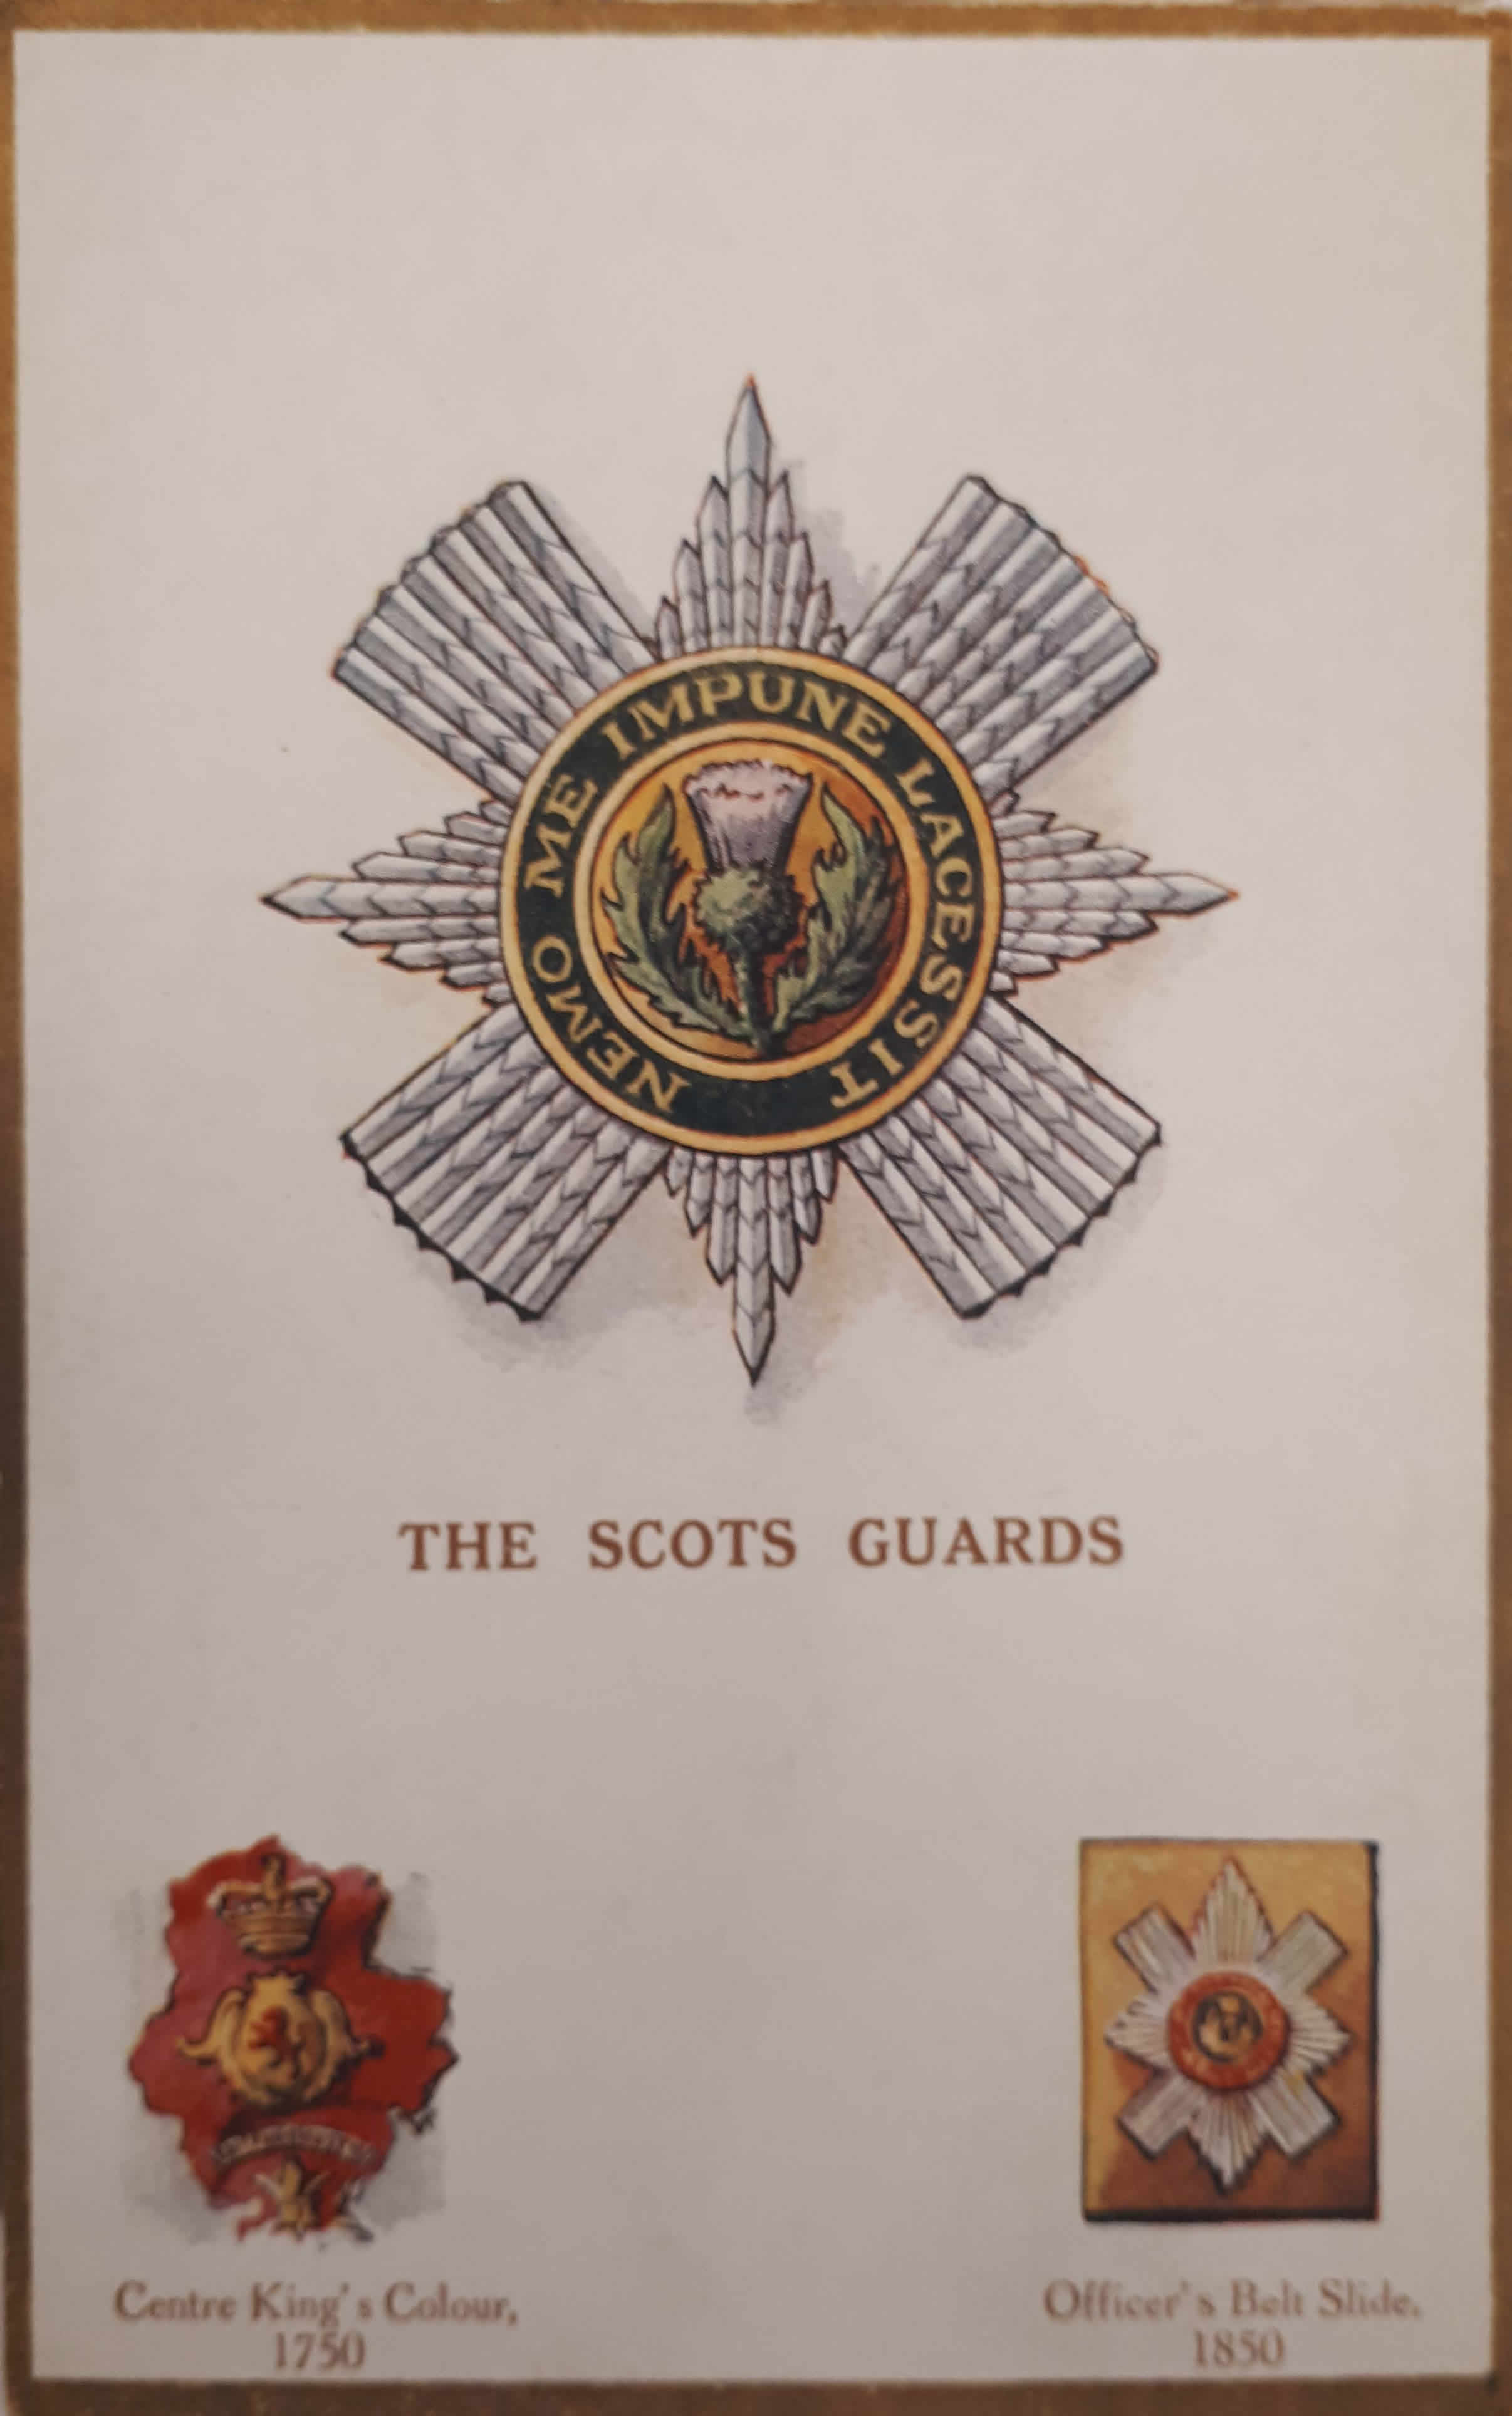 Scots Guards Emblem, Centre King's Colour (1750) & Officer's Belt Slide (1850)